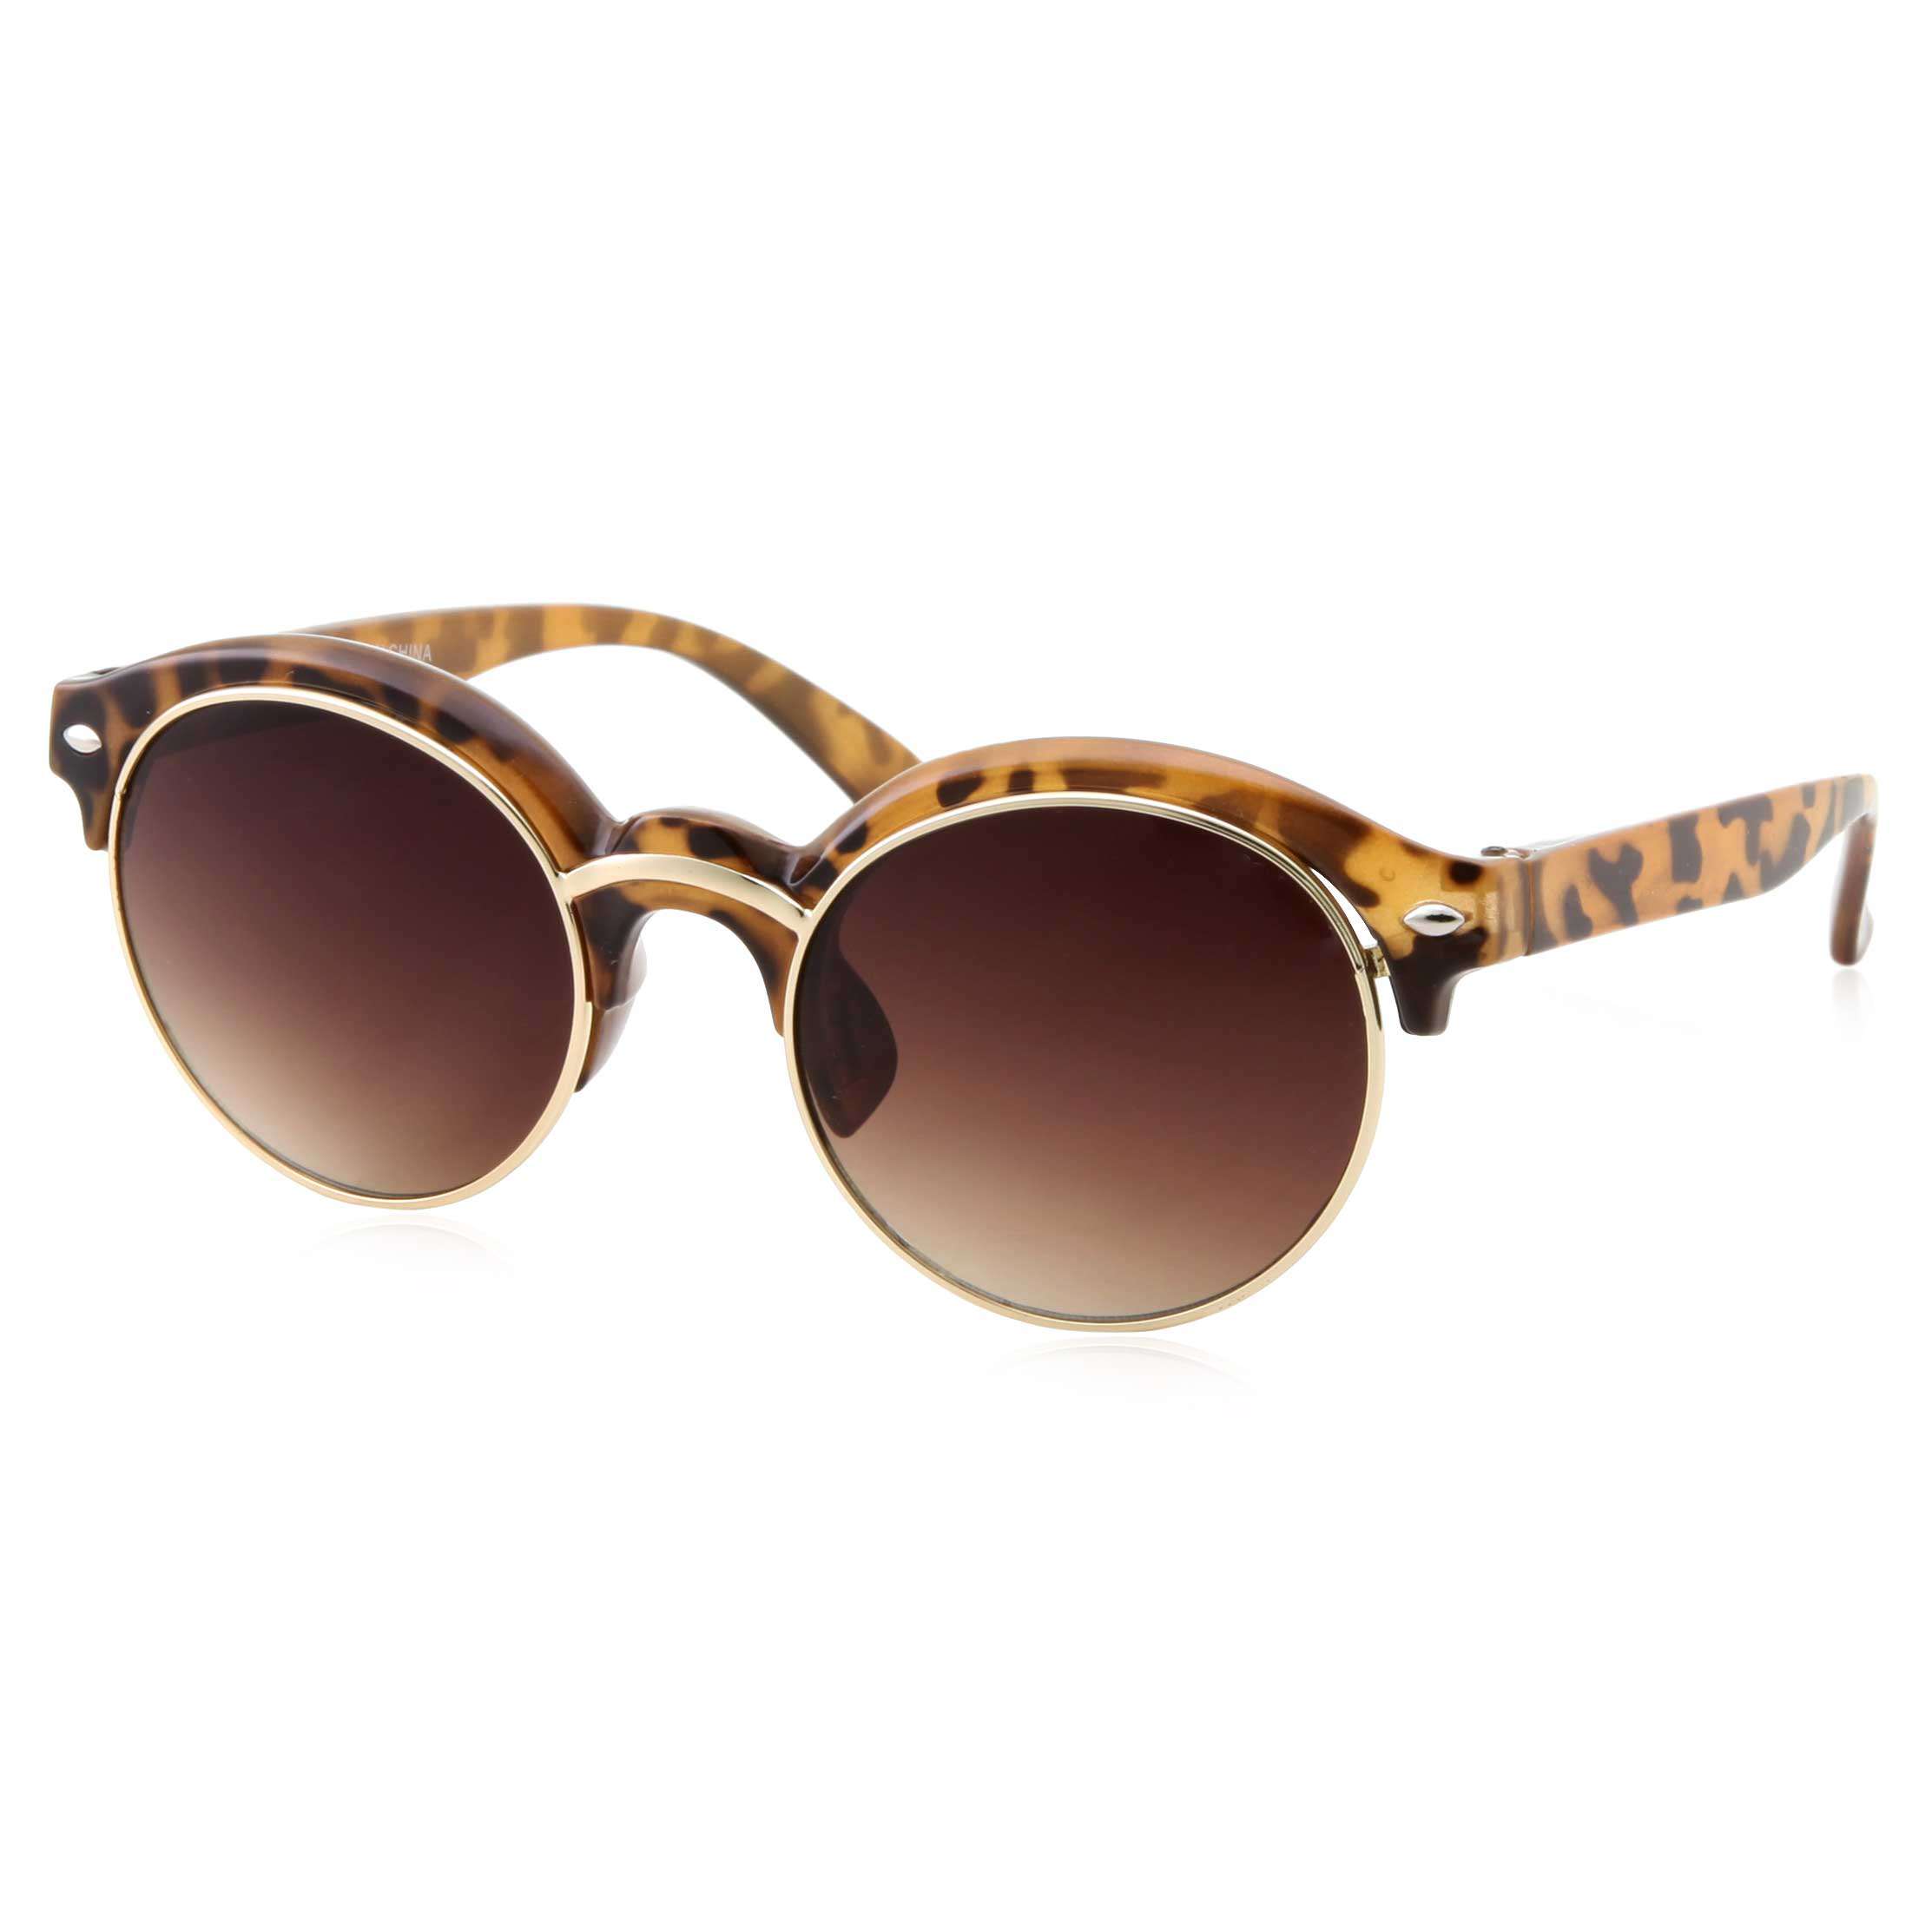 grinderPUNCH Classic Vintage Horned Rim Round Frame Adult Sunglasses for Men Women, Tortoise - image 1 of 5